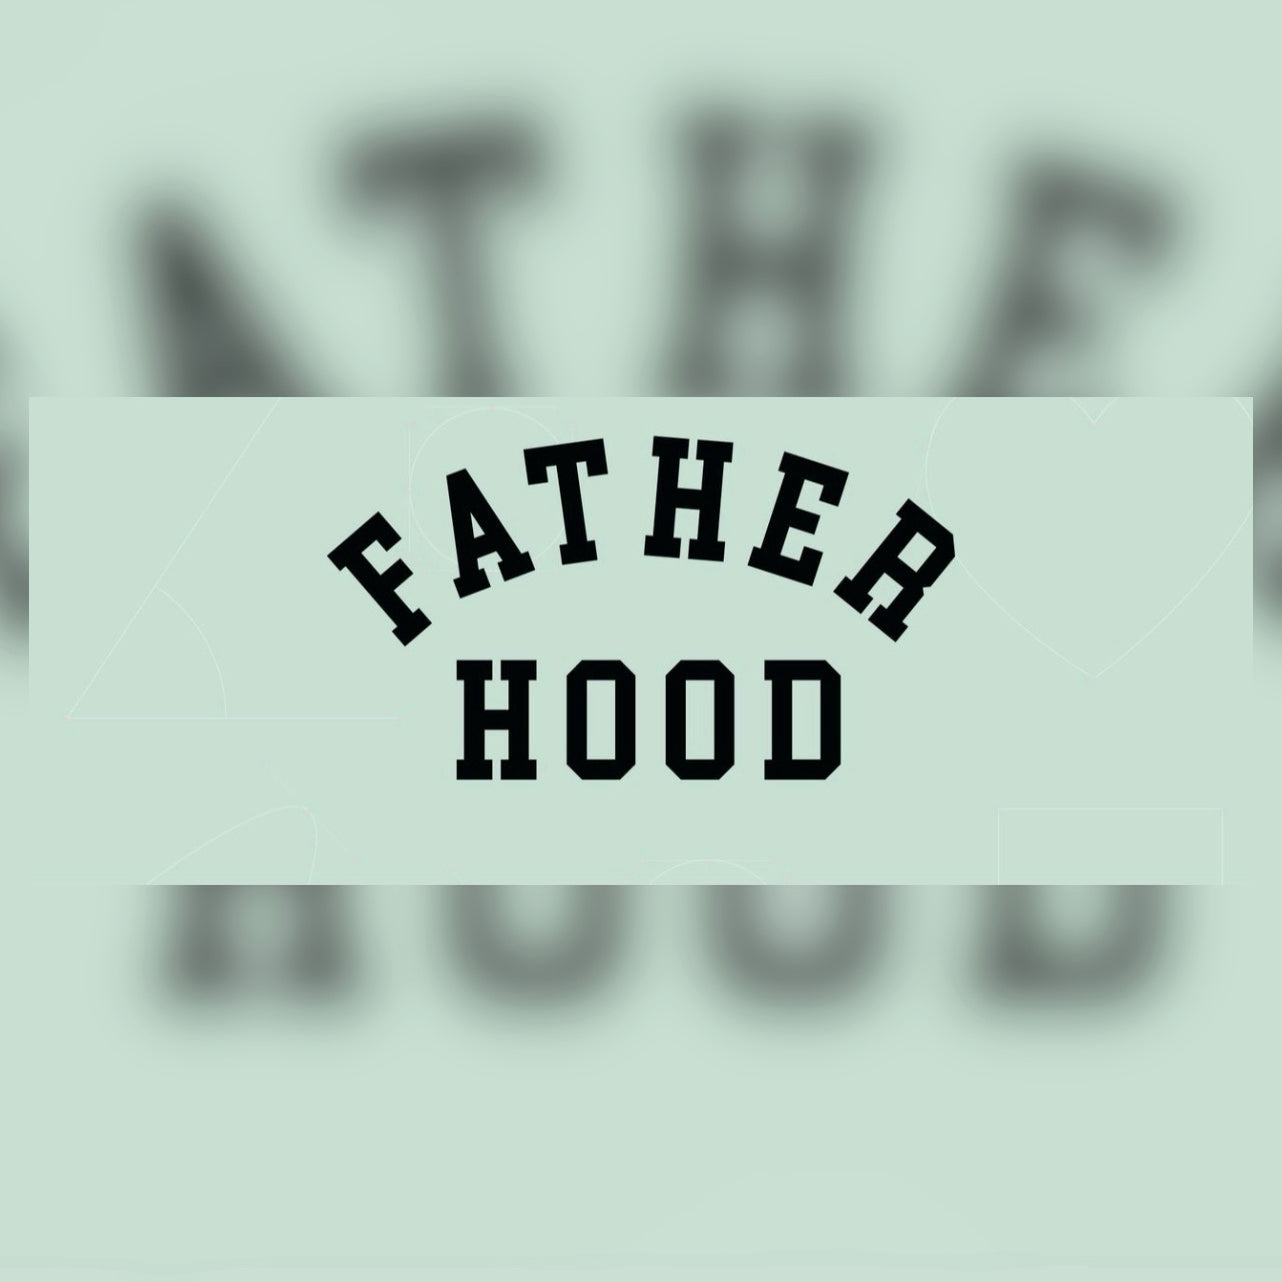 FATHER HOOD